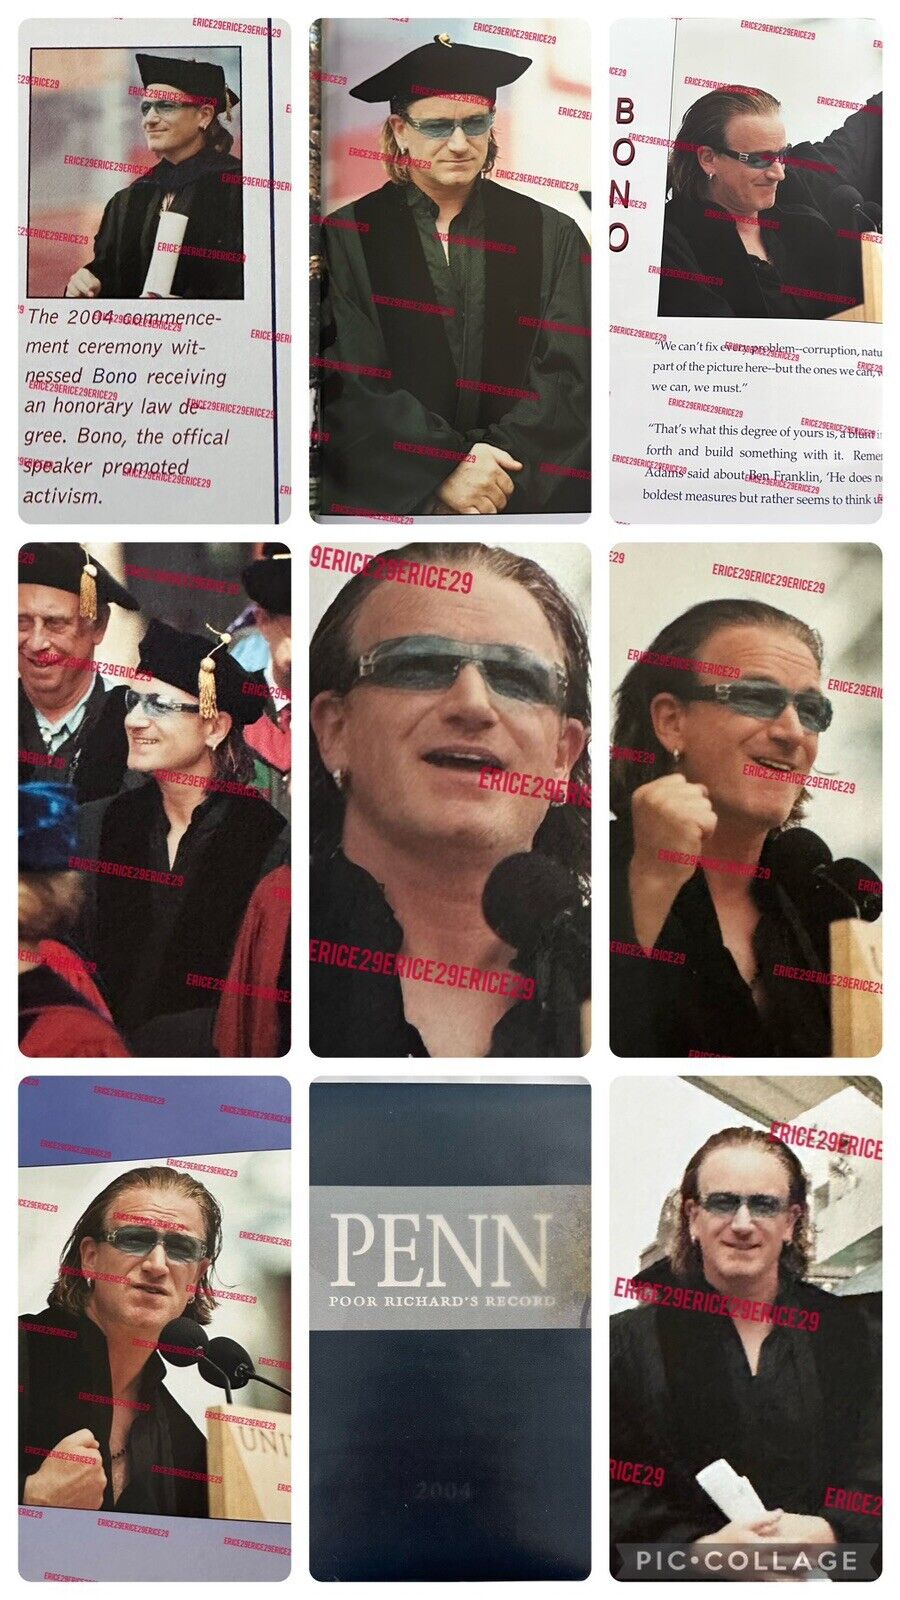 2004 University Of Pennsylvania Penn Yearbook - 8 Photos BONO U2 Commencement